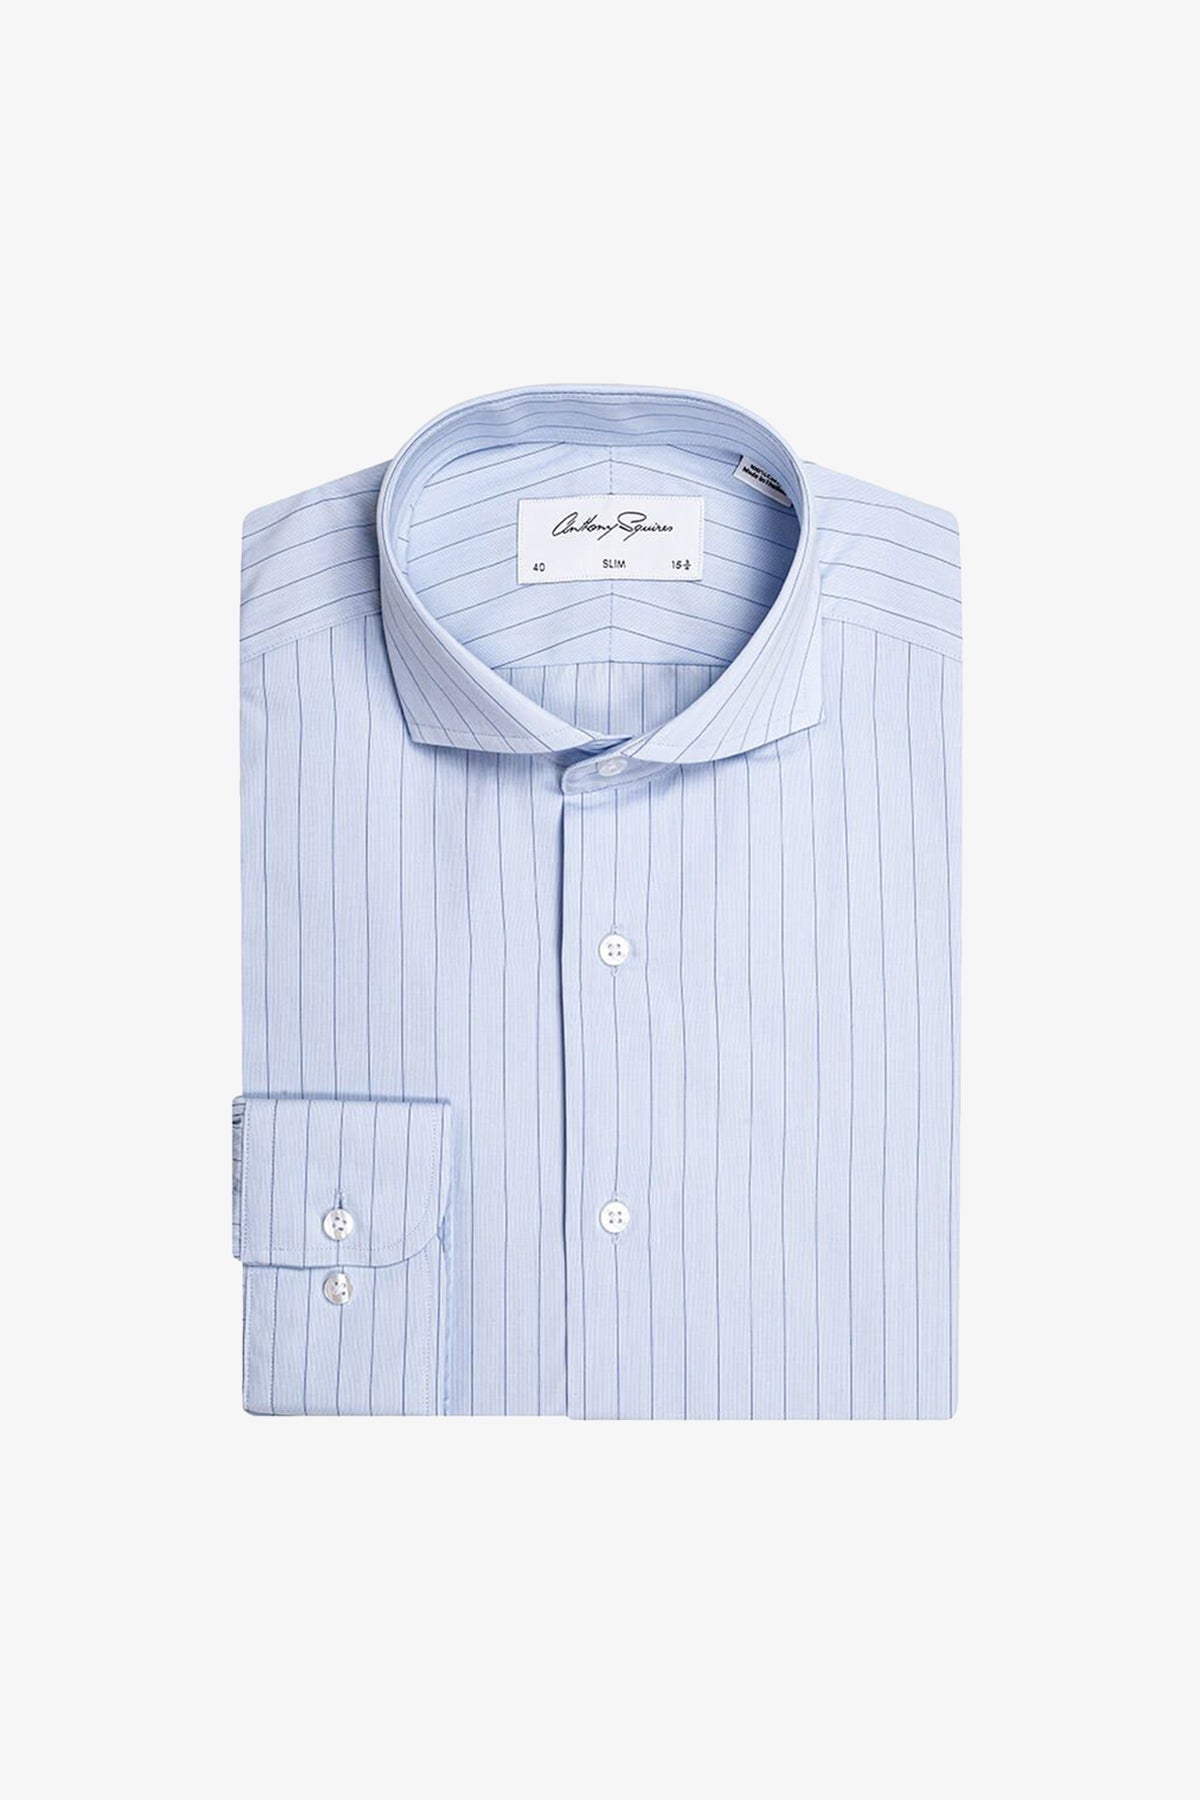 Alton - Light Blue stripe Shirt